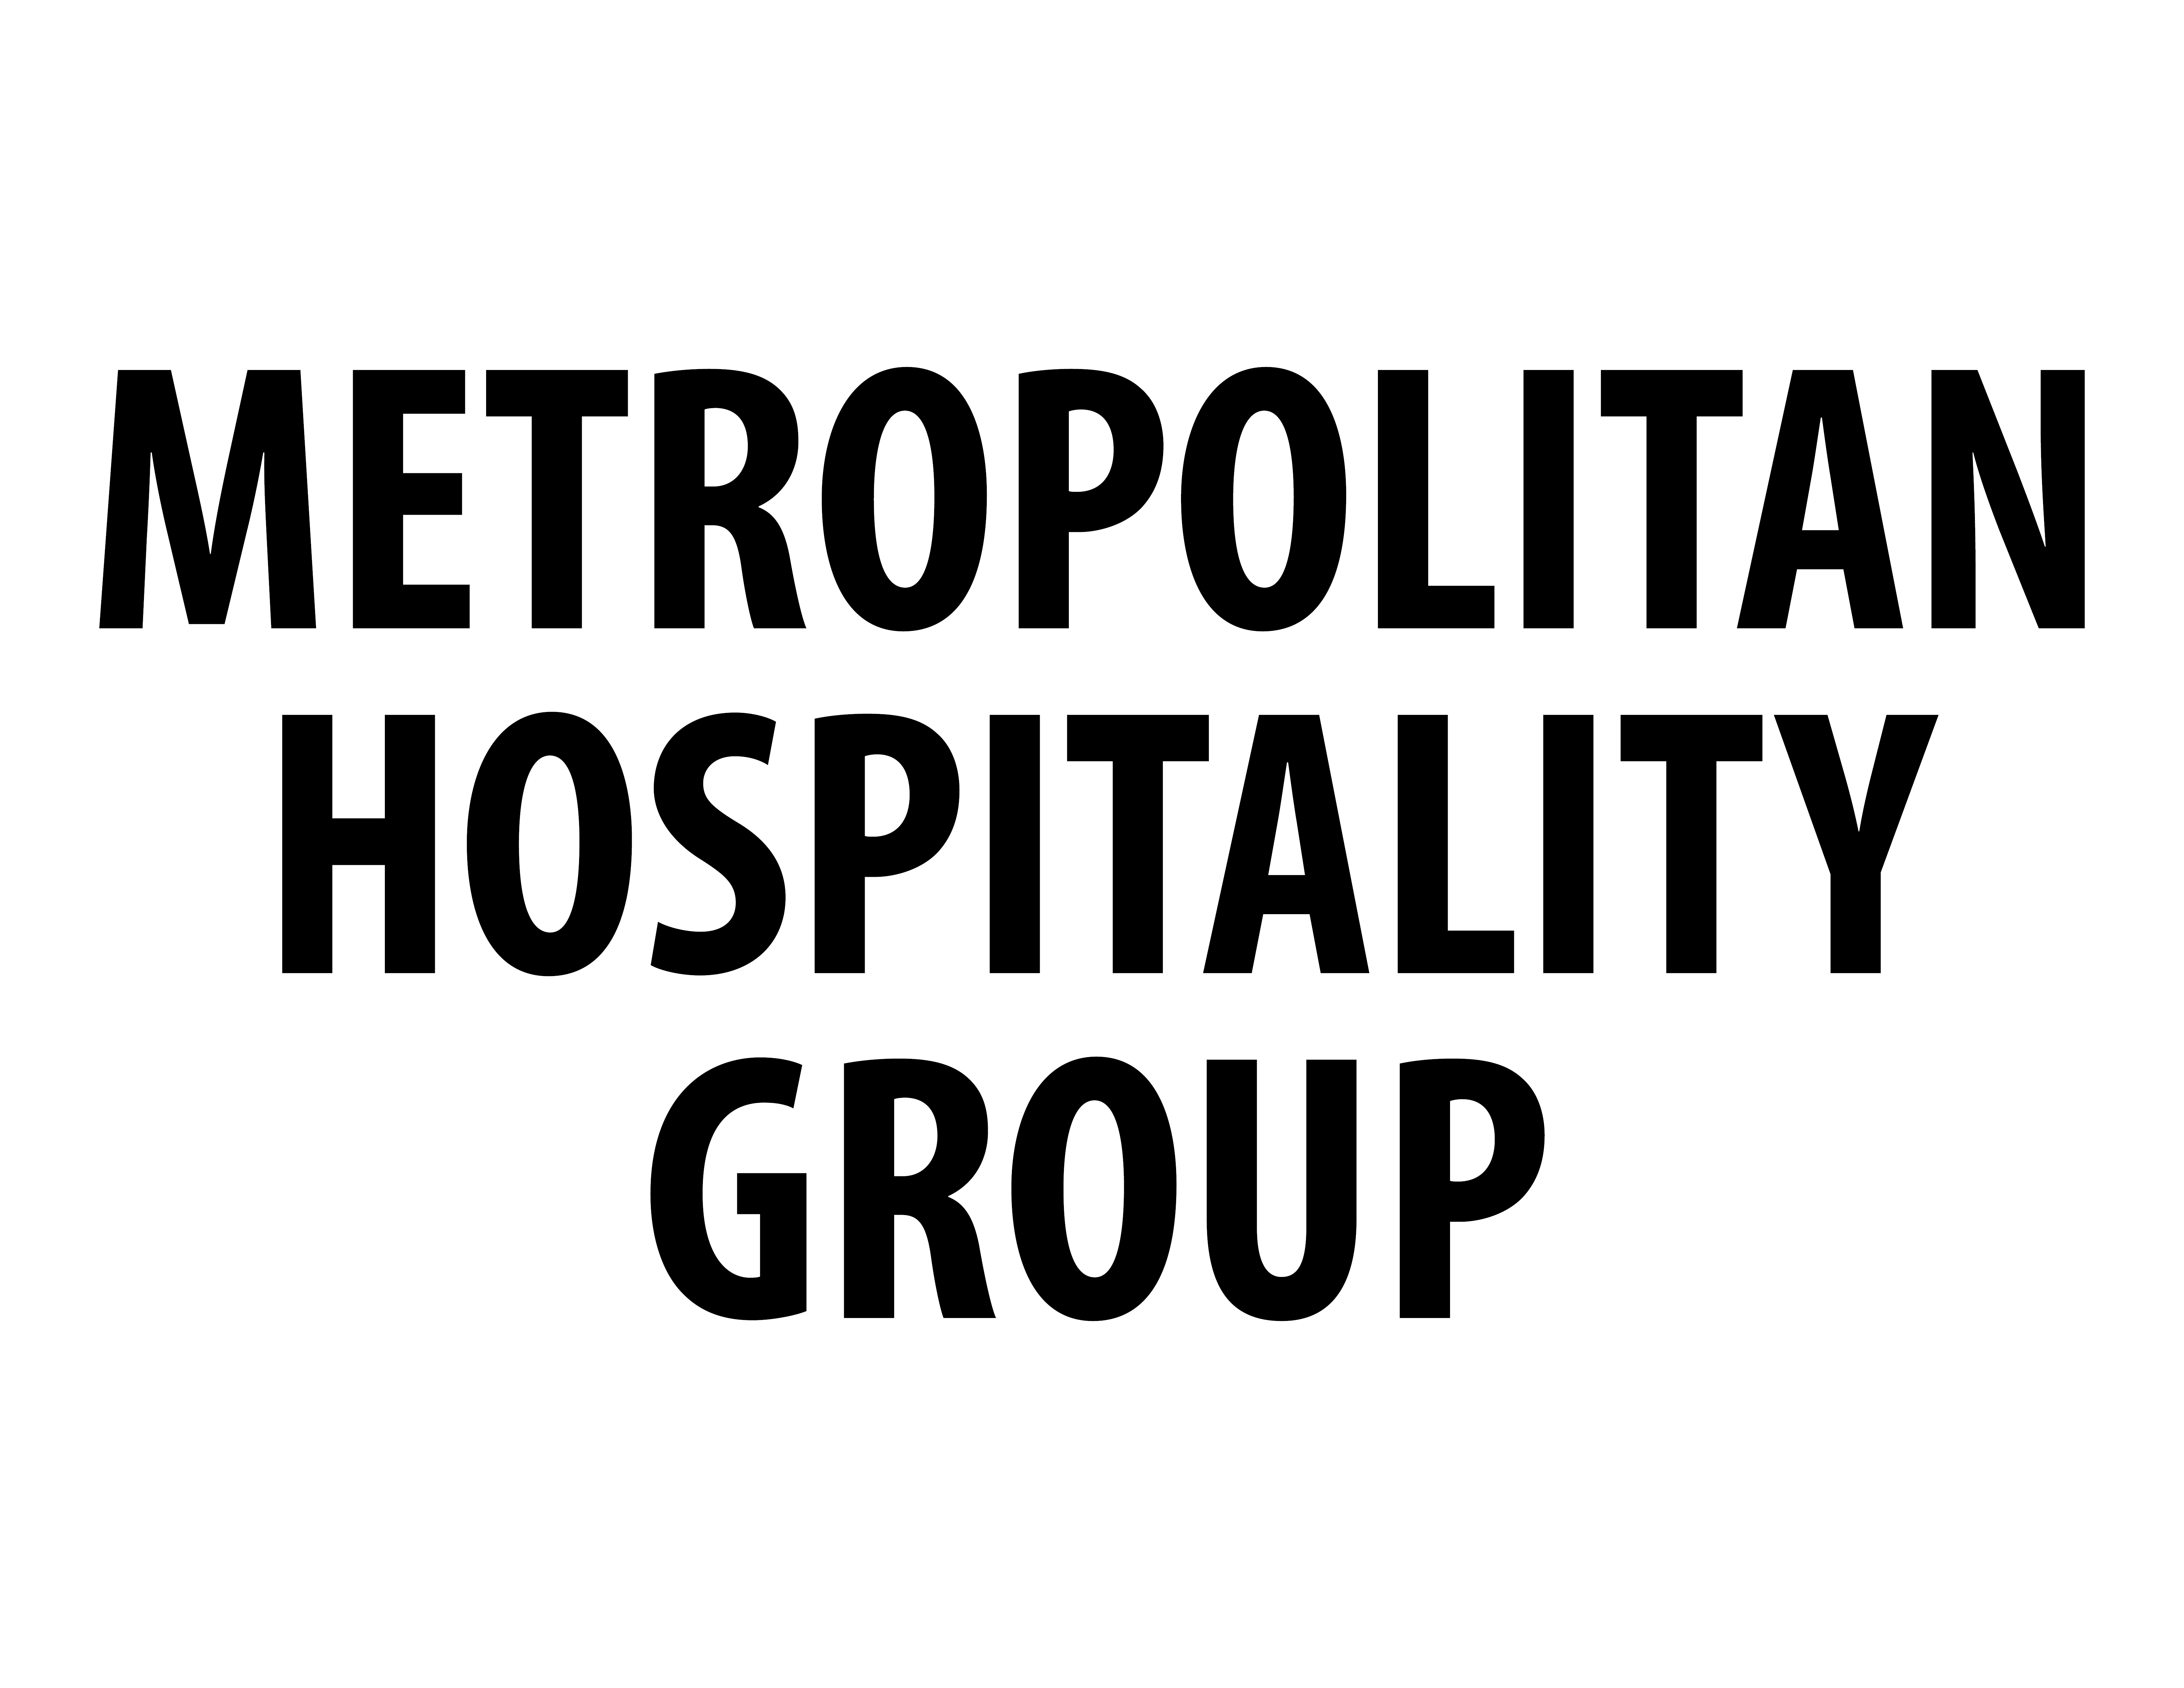 Metropolitan Hospitality Group logo